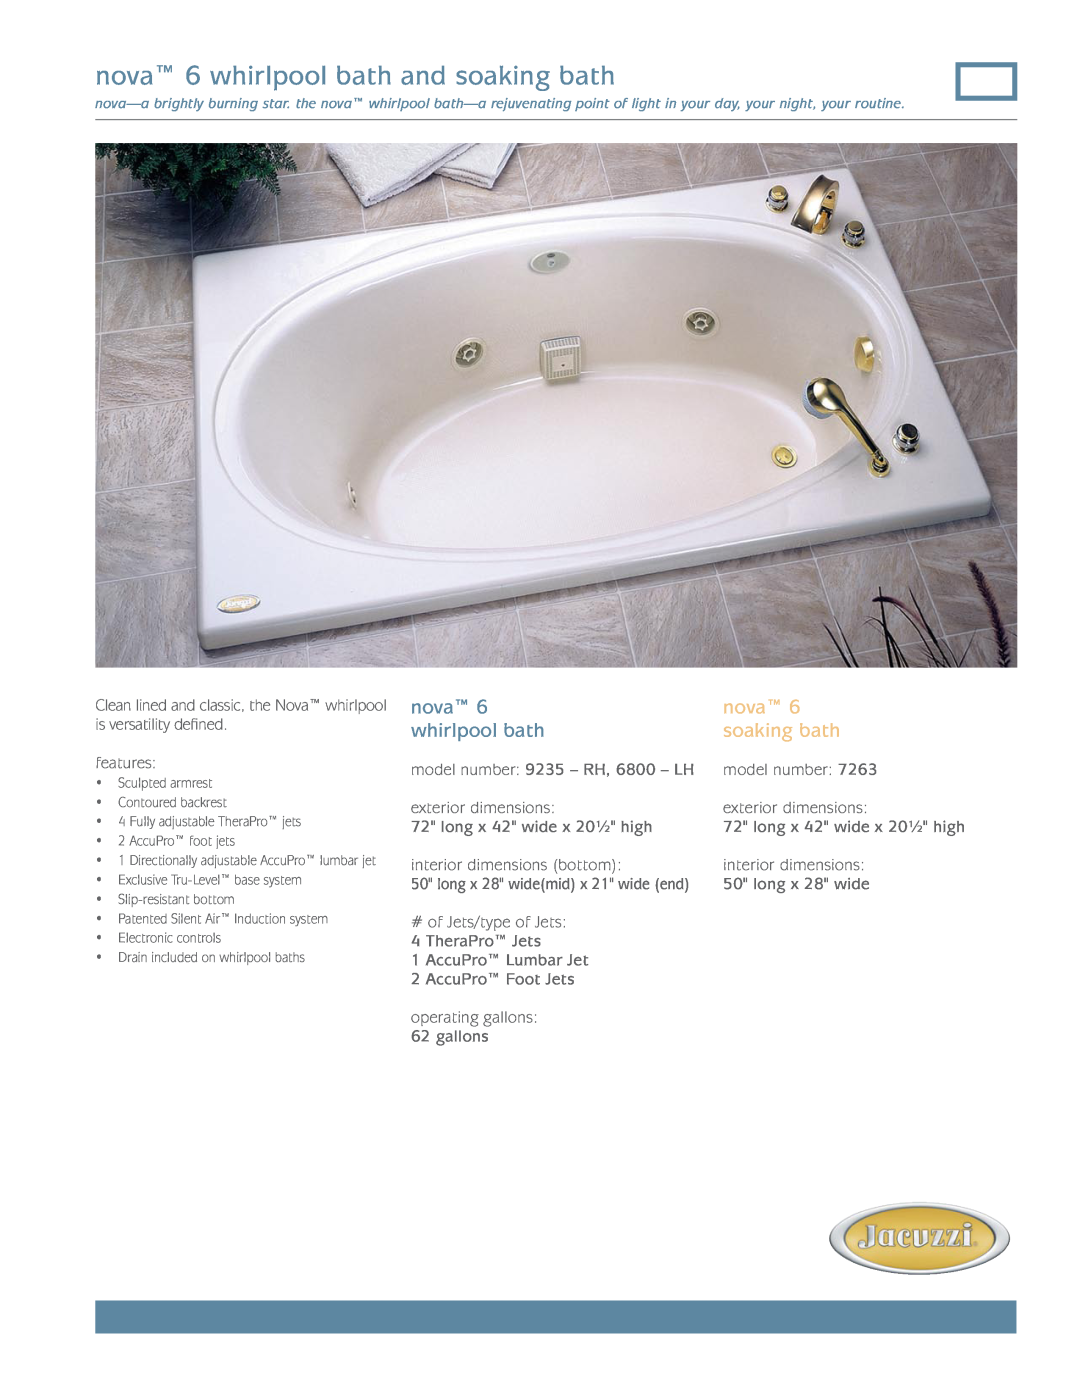 Jacuzzi 9235-RH, 7263, 6800-LH dimensions nova 6 whirlpool bath and soaking bath 